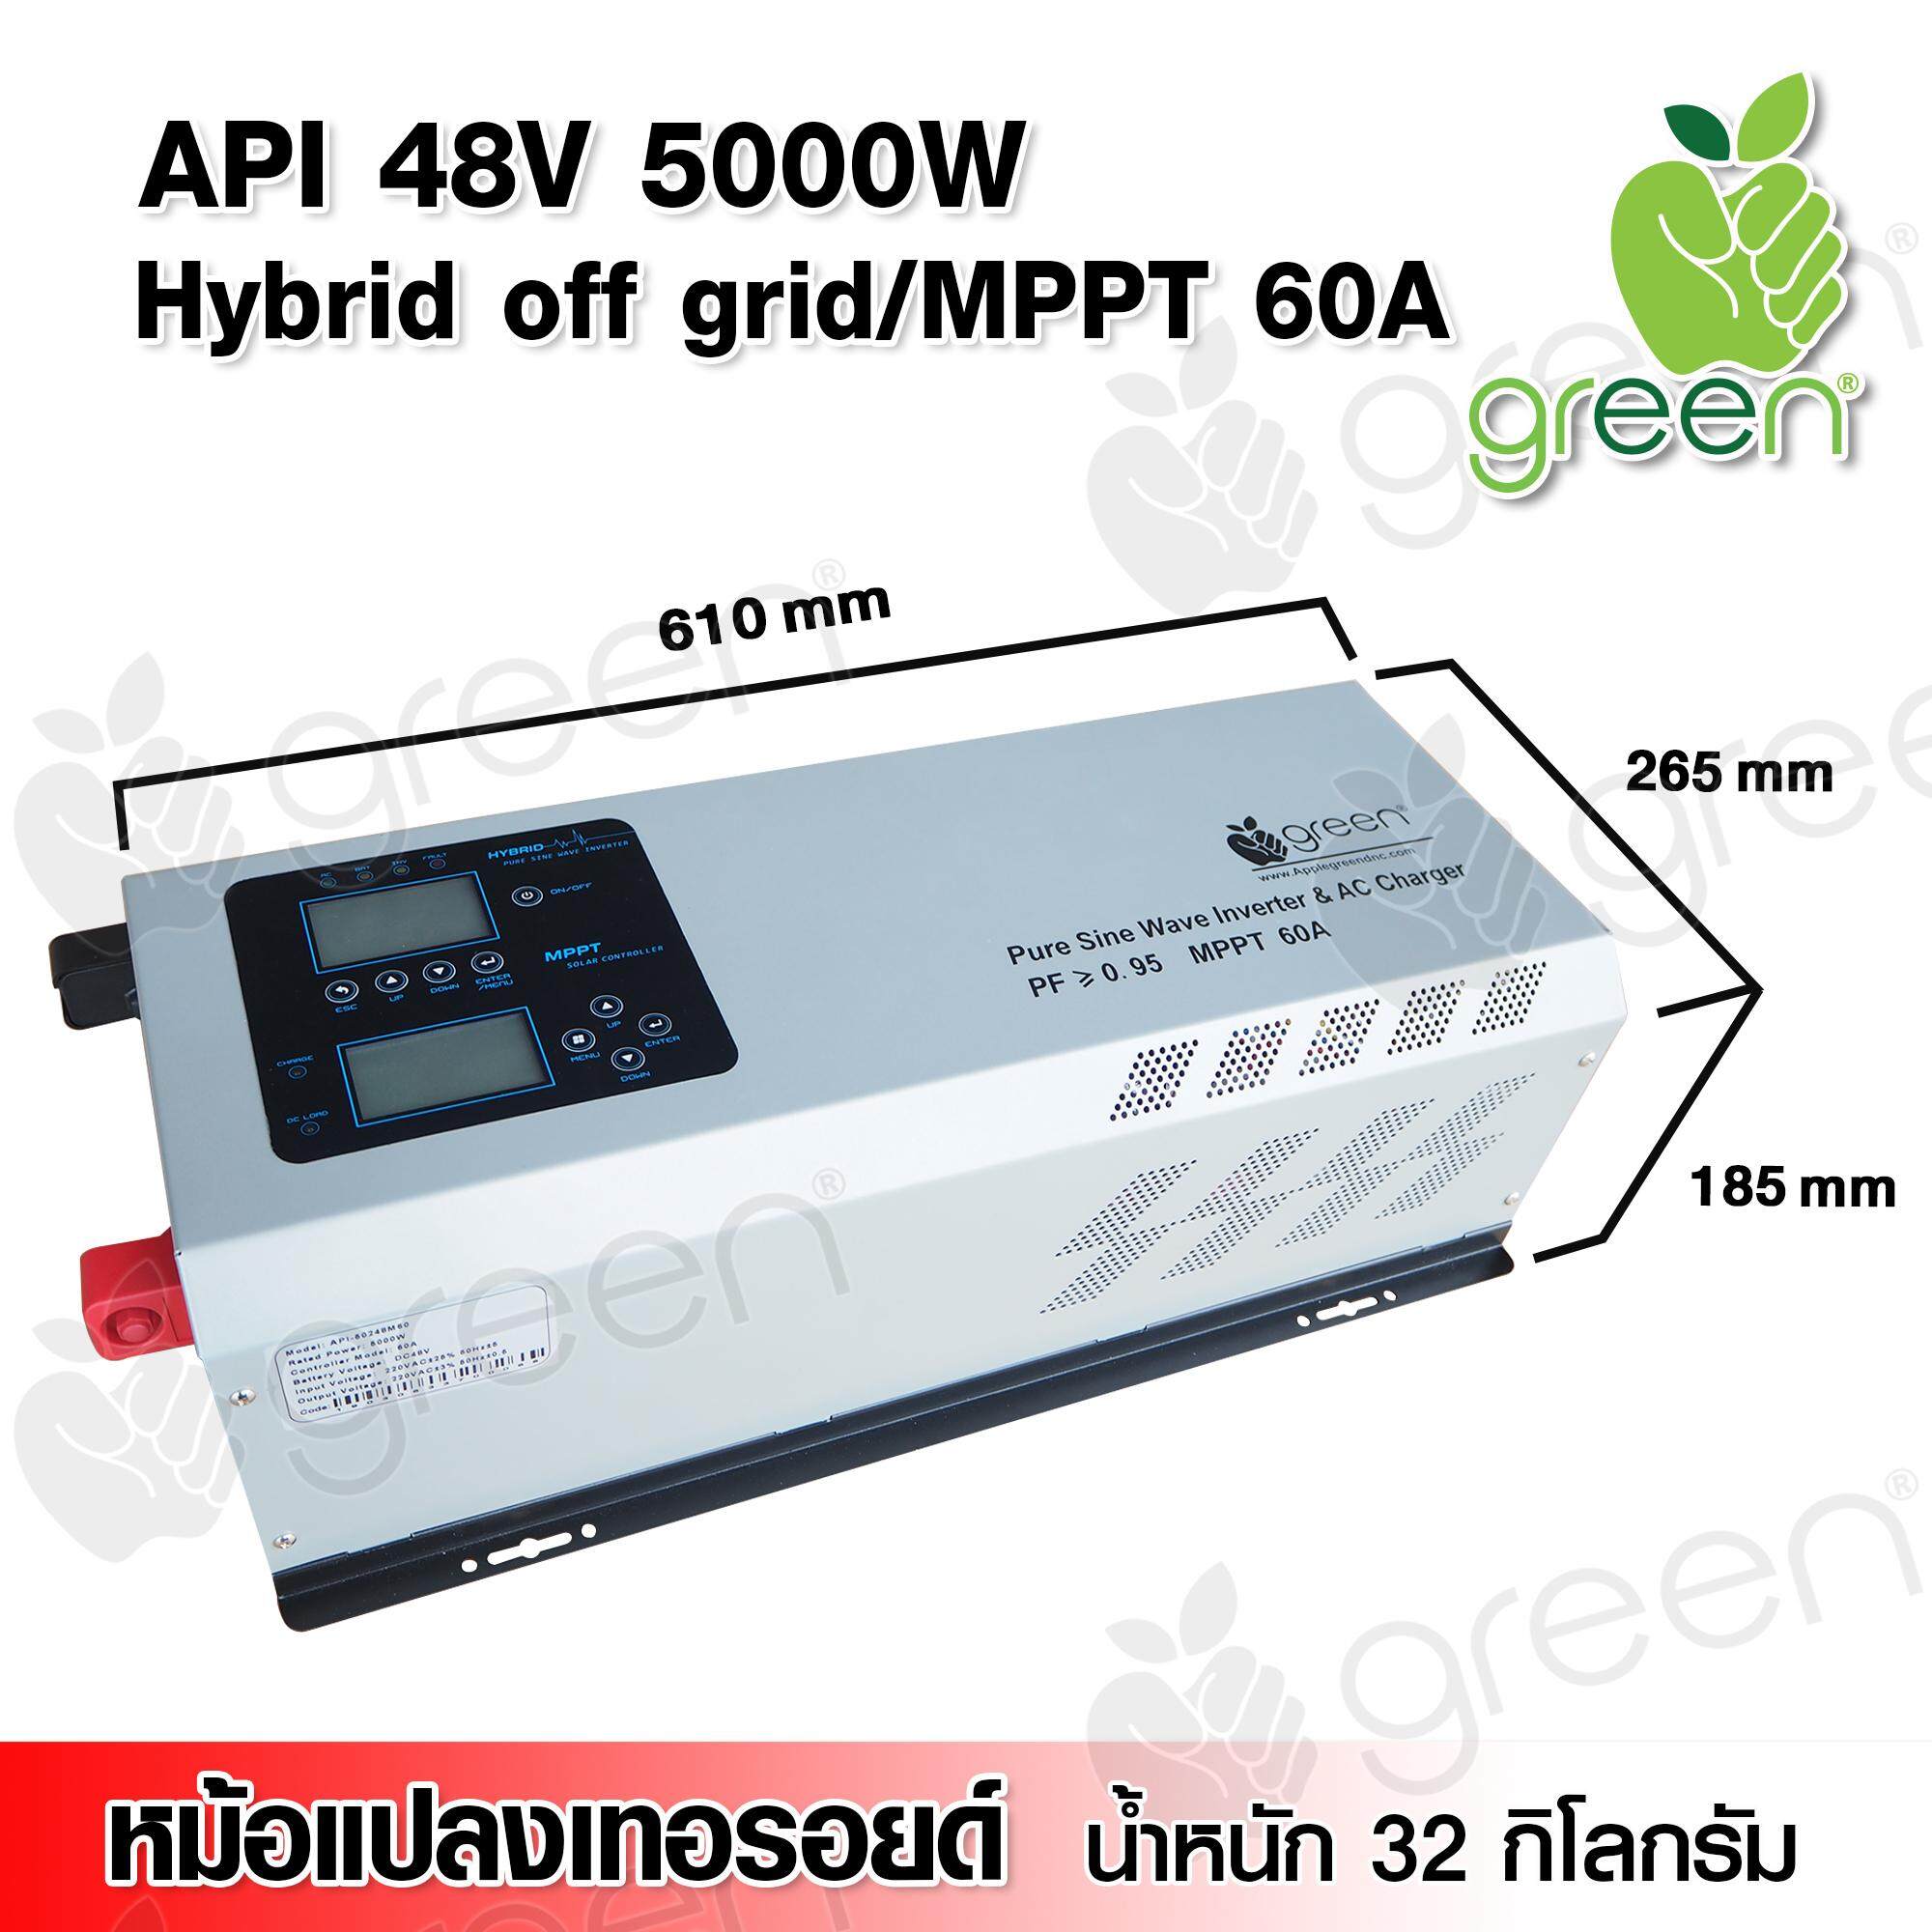 Applegreen Inverter pure sine wave หม้อแปลงเทอรอยด์ ไฮบริด API 48V 5000W MPPT 60A Hybrid off grid Auto bypass Transformer AC in/out AC charger UPS ชาร์จแบตเตอรี่ ใช้กับระบบโซล่าเซลล์ ต่อกับไฟบ้านได้ เหมาะกับงานหนัก พีคได้ 3 เท่า มาตรฐานยุโรป